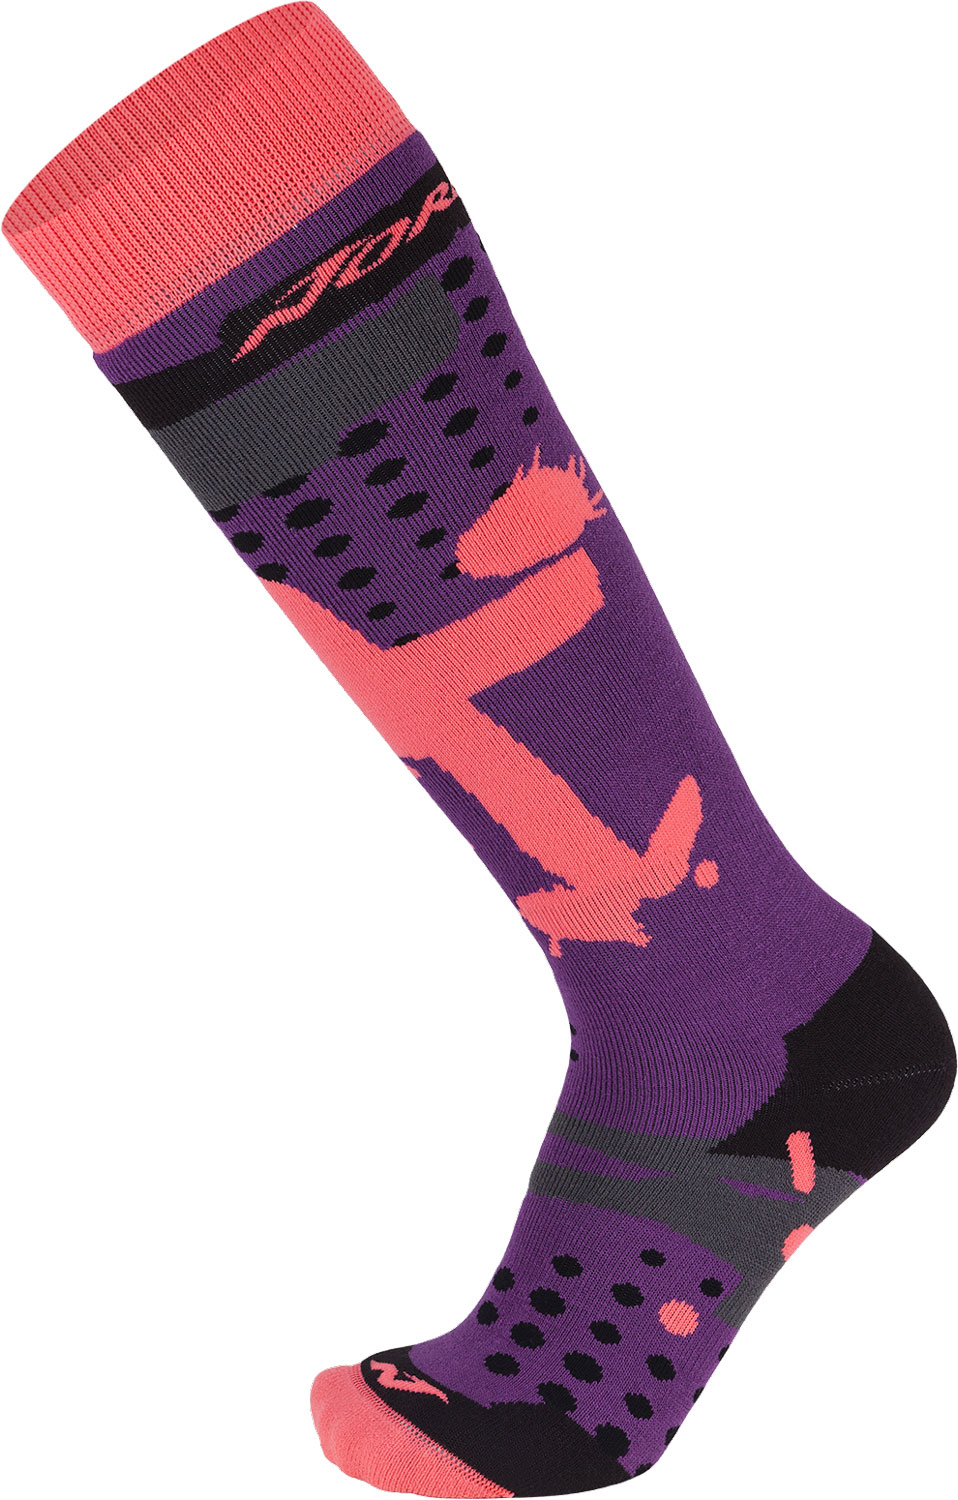 Girls’ ski knee socks